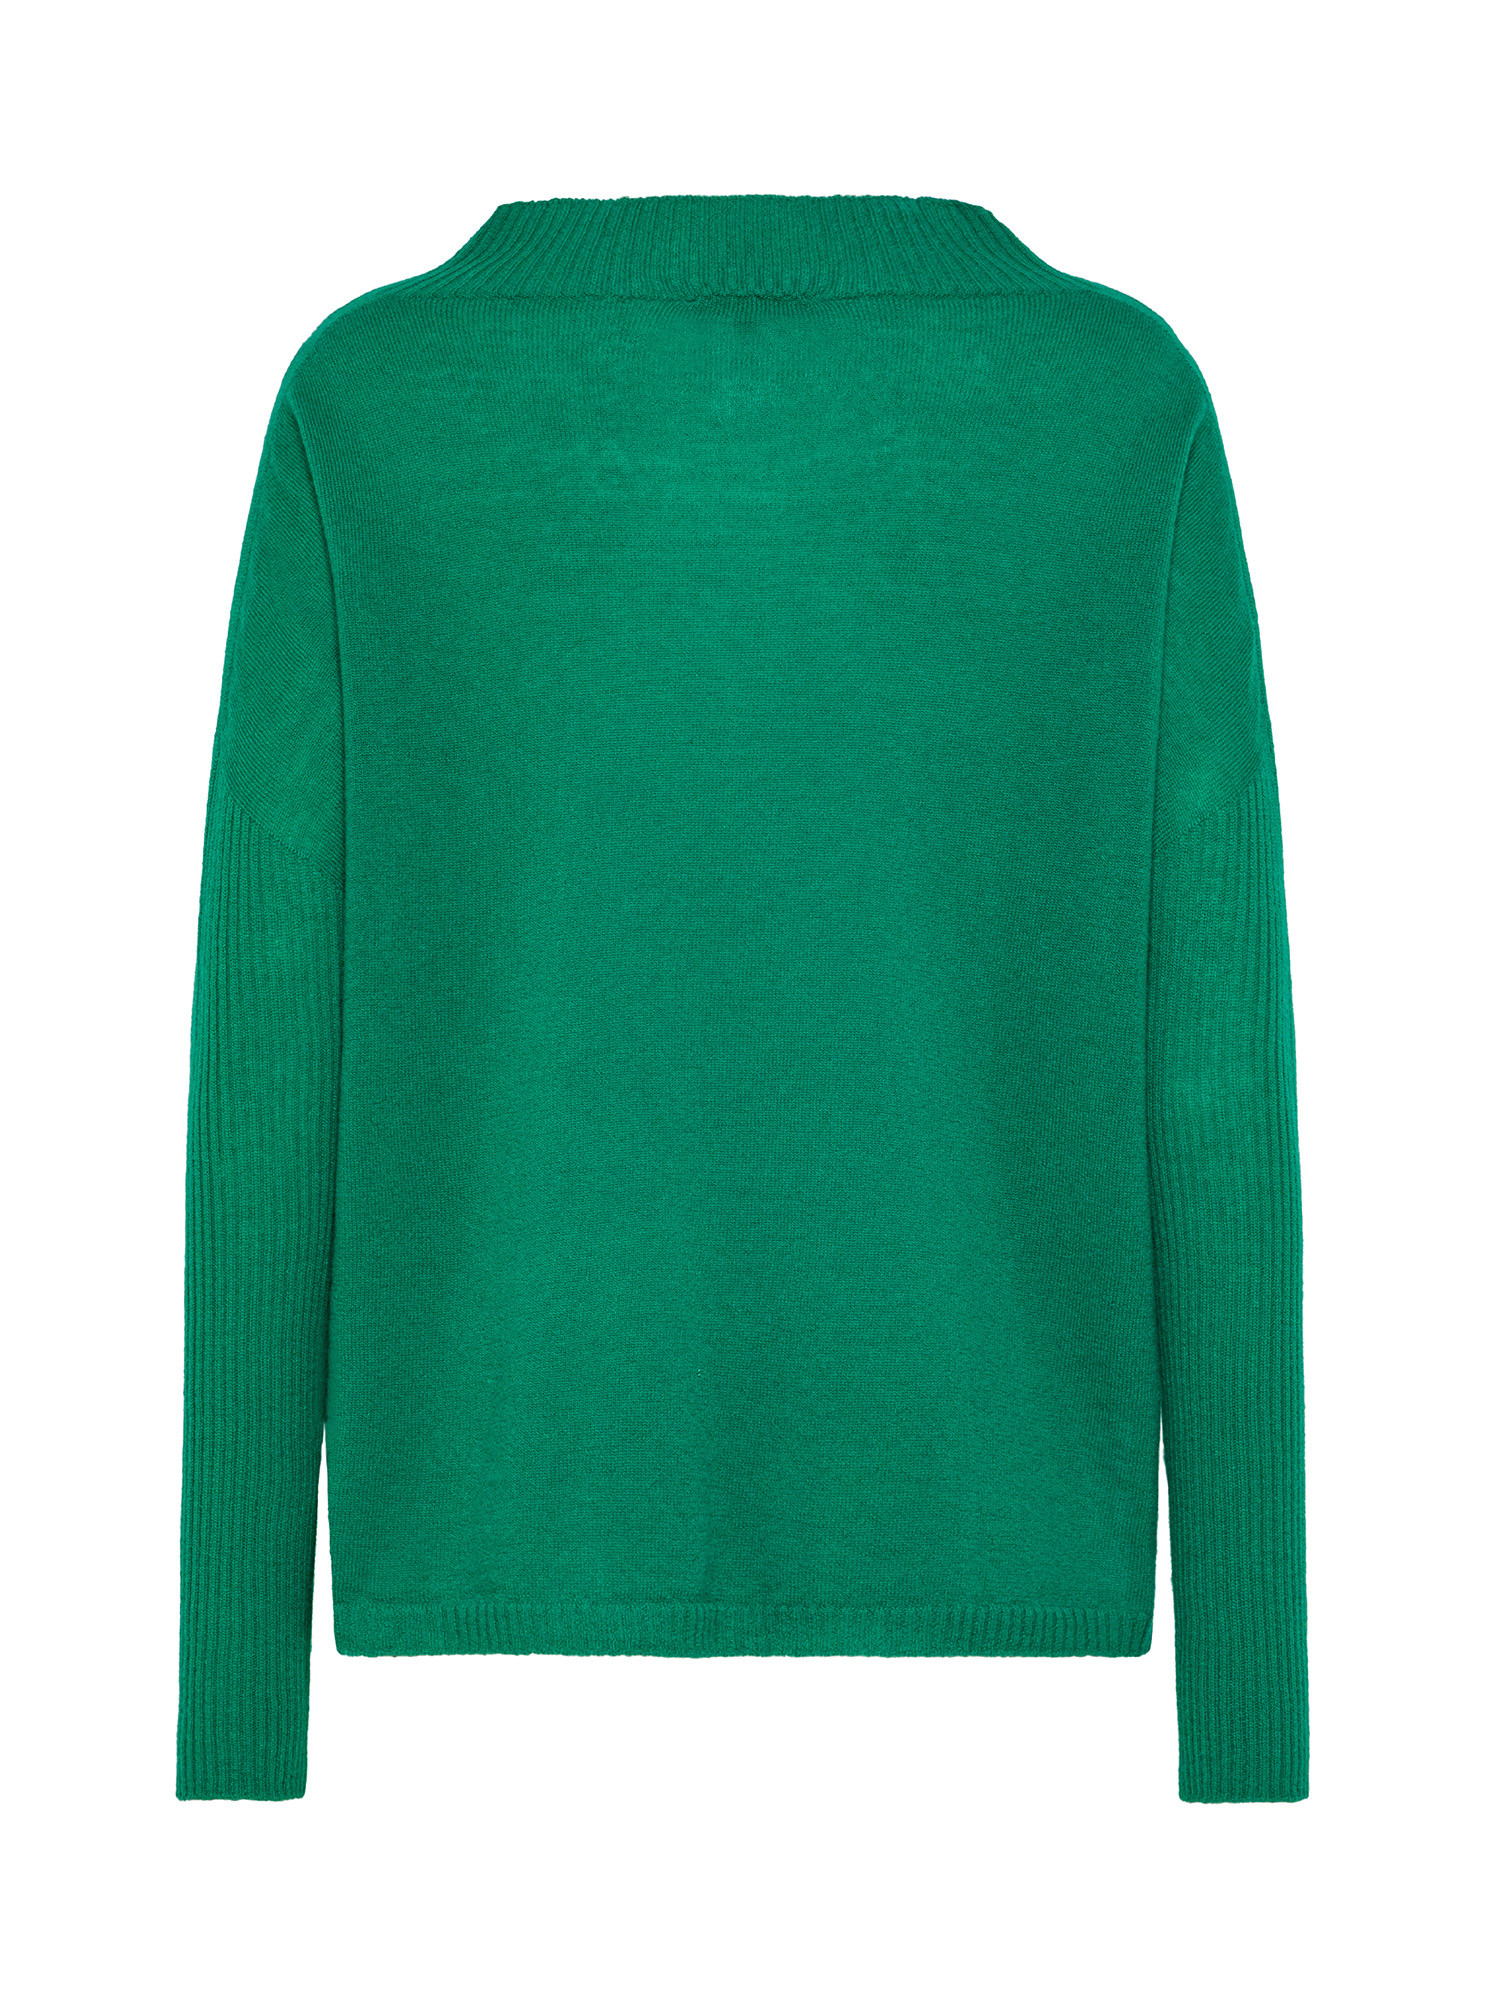 K Collection - Turtleneck sweater, Green, large image number 1